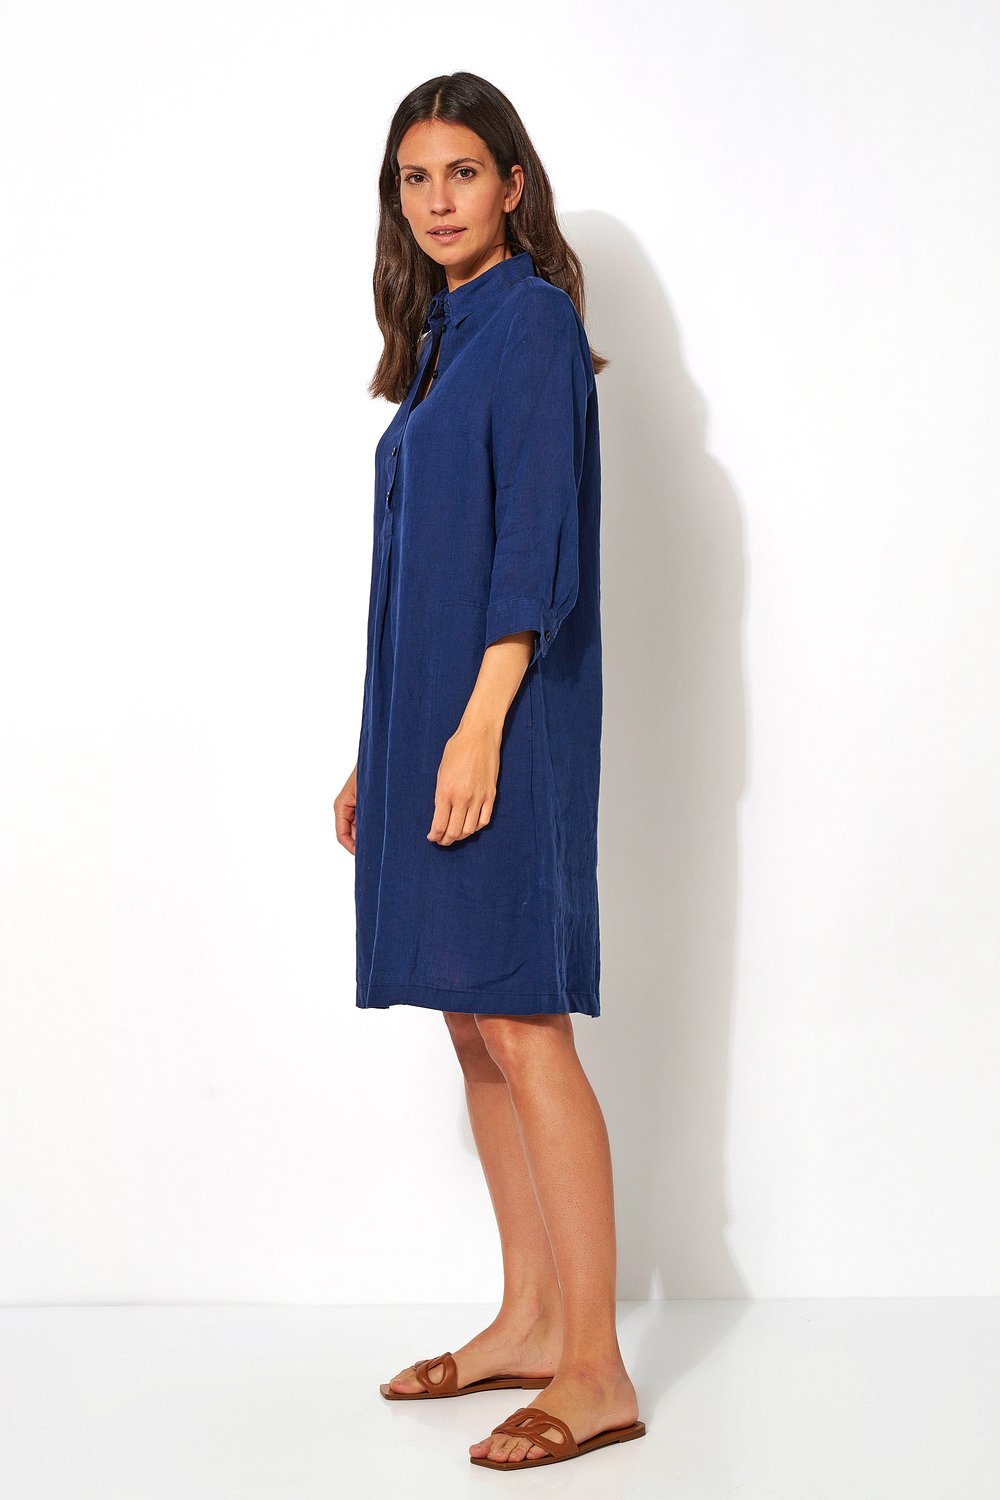 Relaxed linen dress | Style »Aila« dark blue